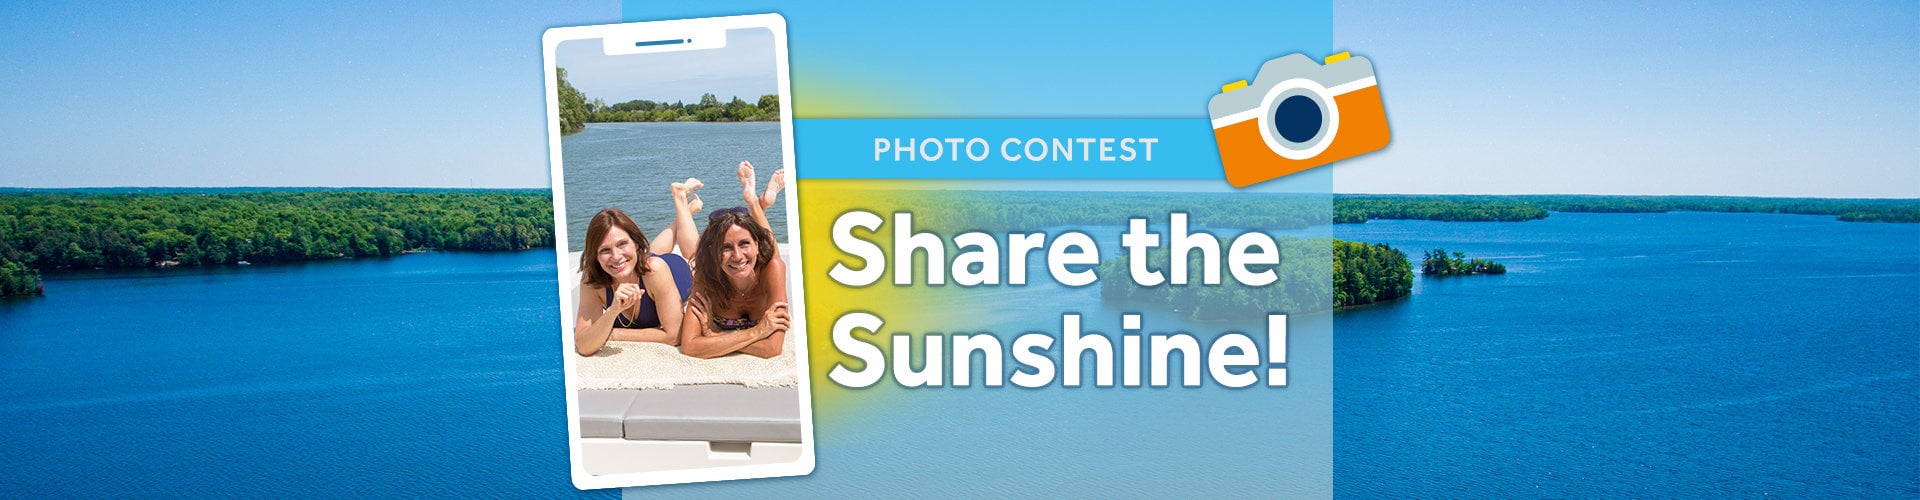 Share the sunshine - photo contest